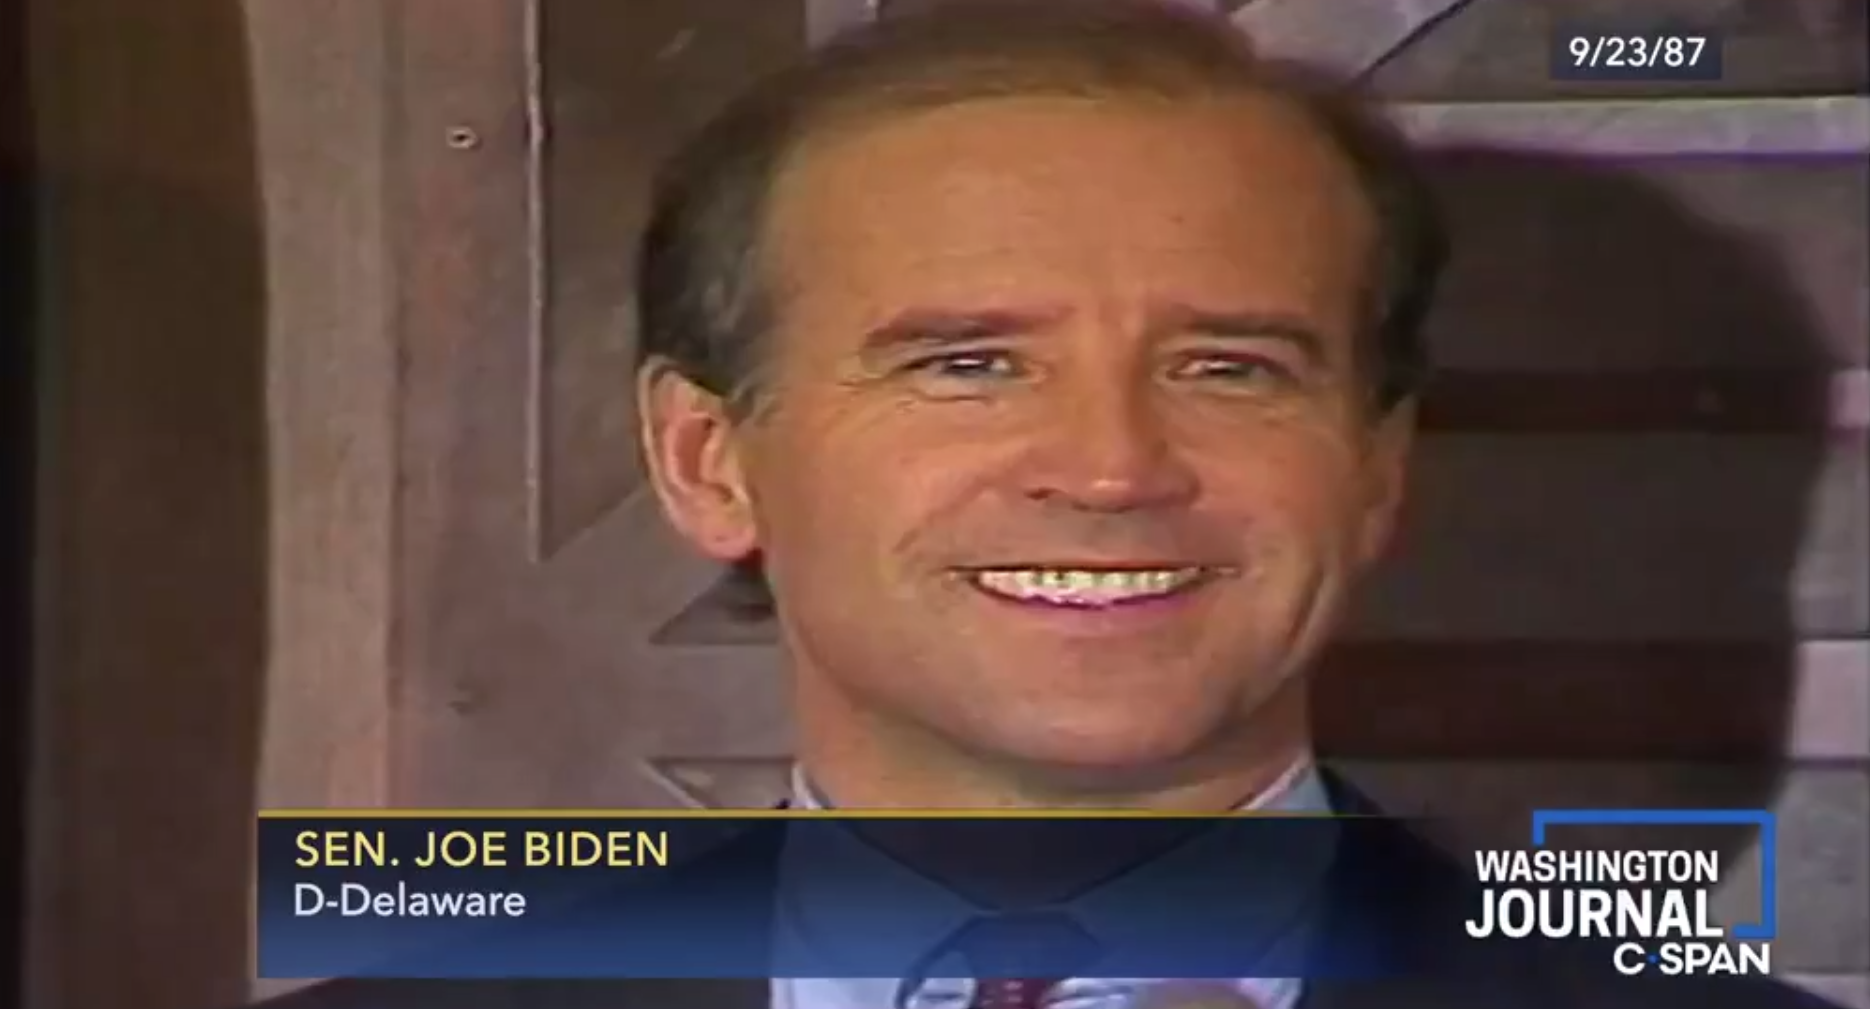 Young Joe Biden. 